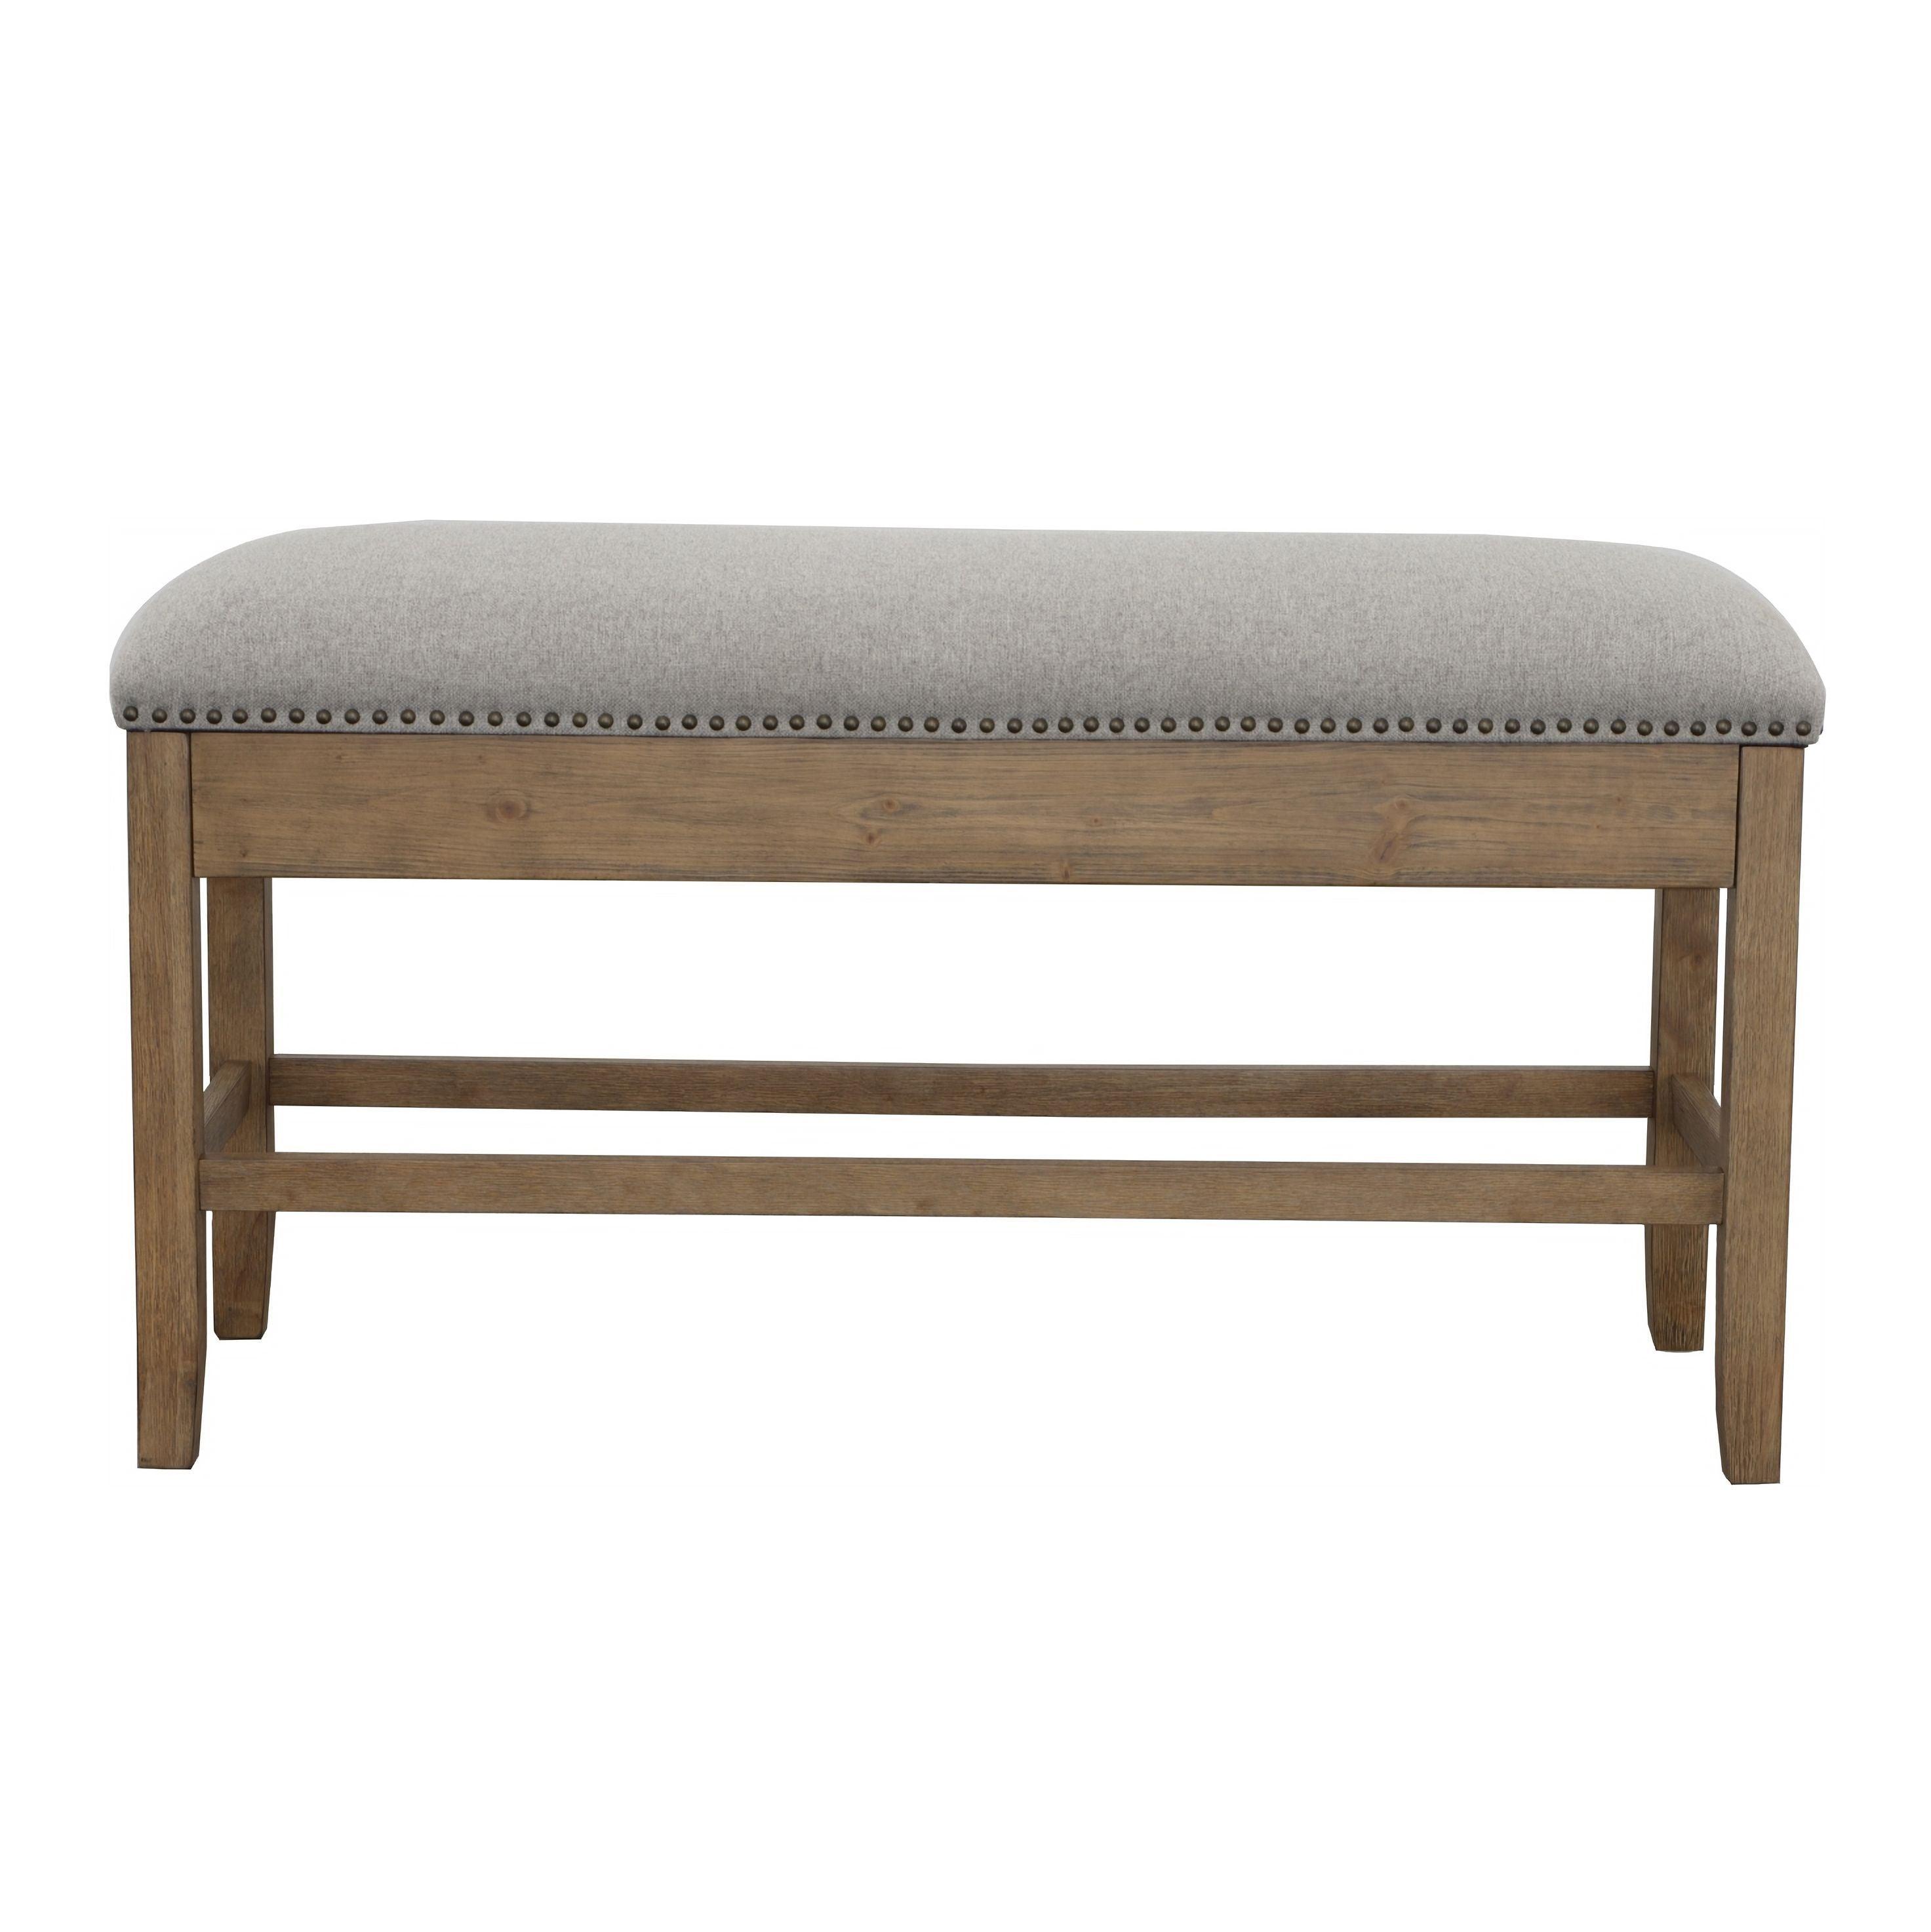 Steve Silver Furniture - Grayson - Counter Storage Bench With Nailhead - Dark Brown - 5th Avenue Furniture